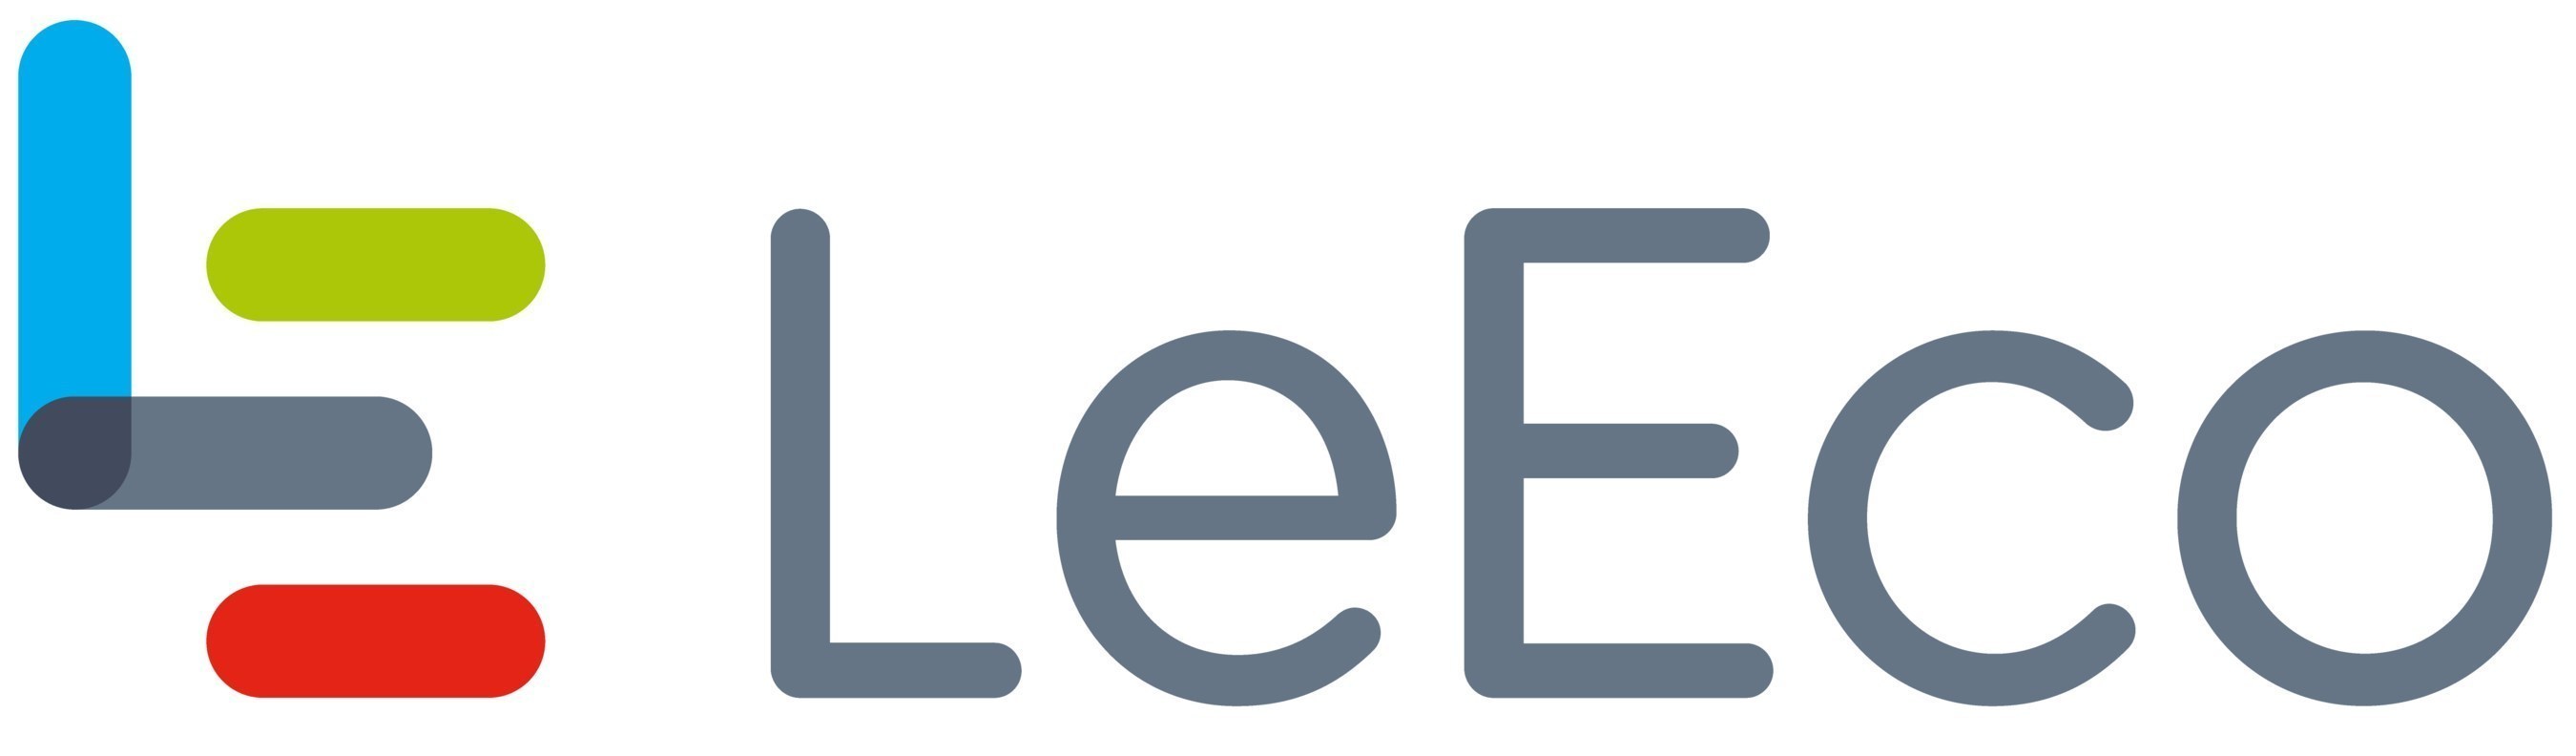 LeEco company logo